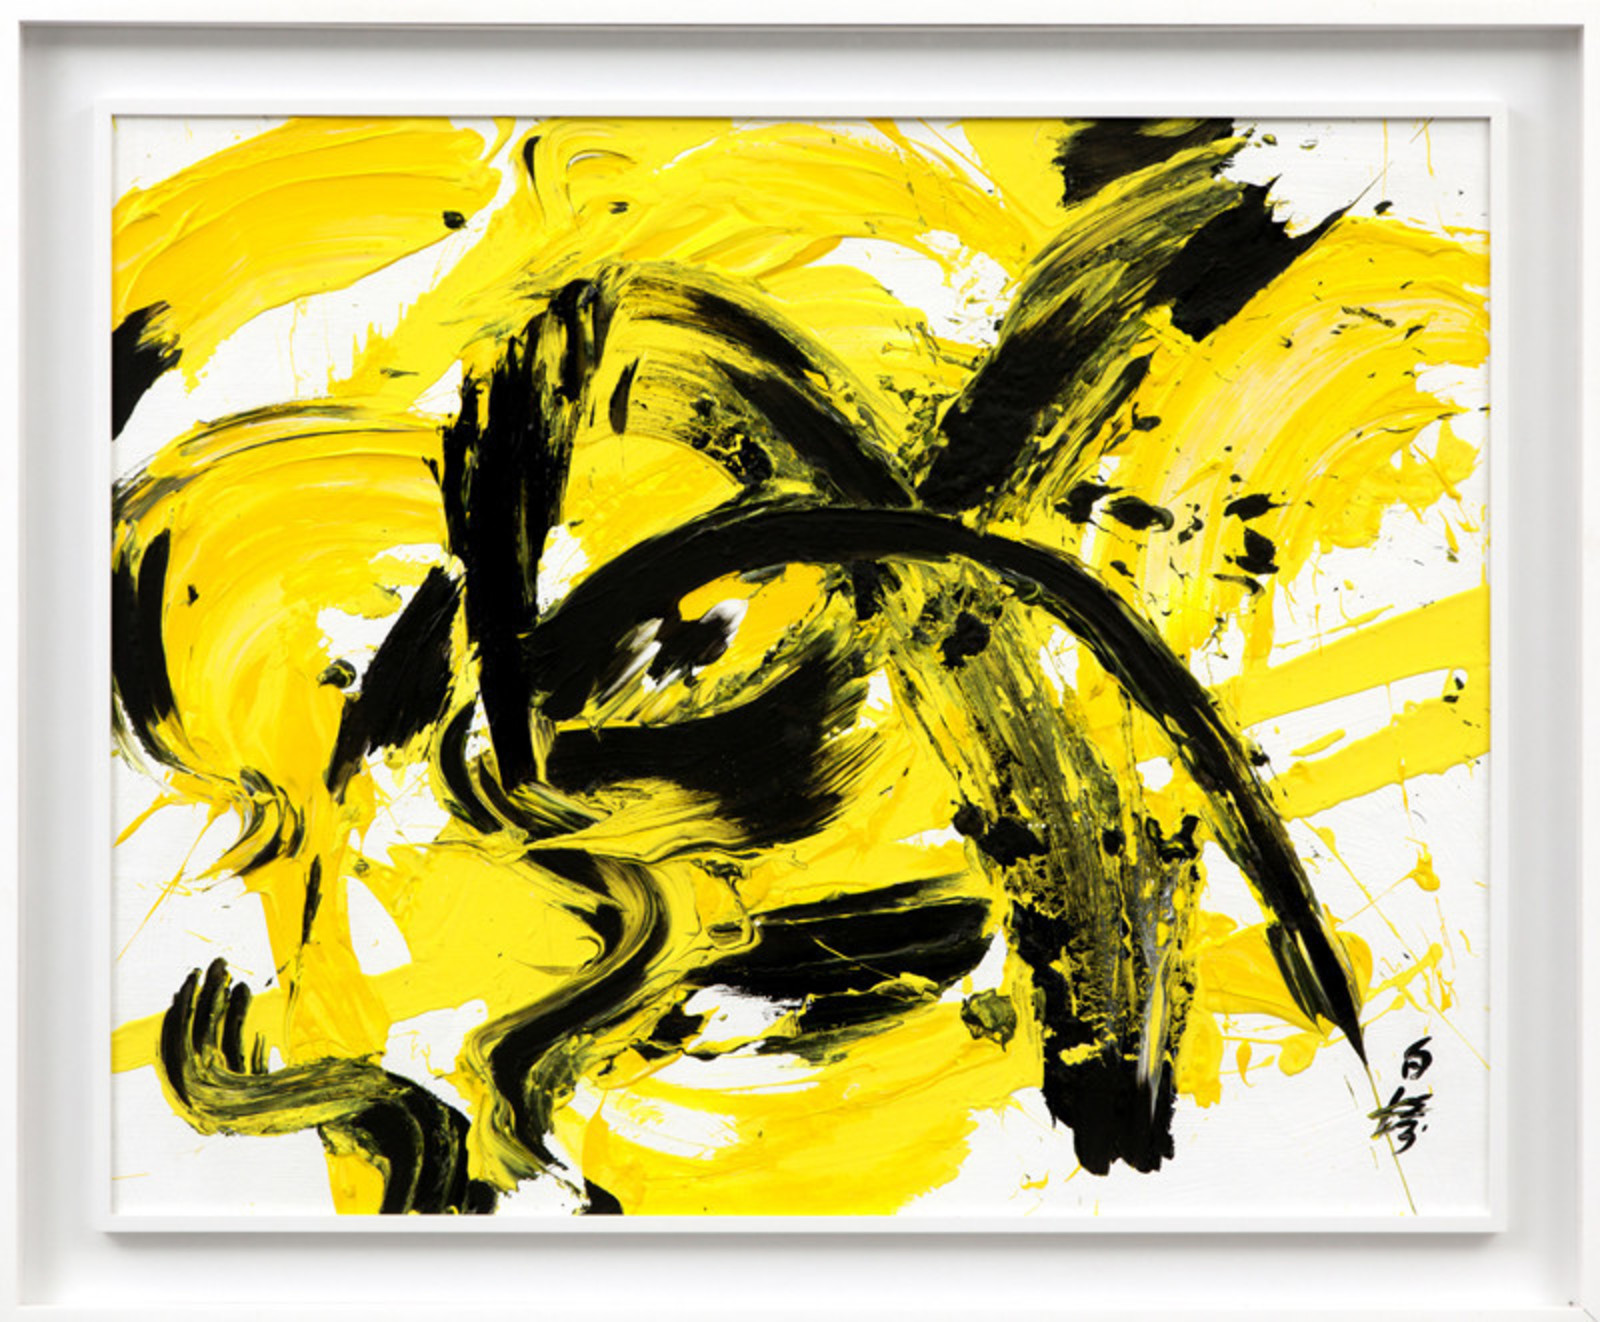 Кацуо Ширага. Желтая линия. 1992. Холст, масло. 73 x 91 см. Городской музей Амстердама, Нидерланды